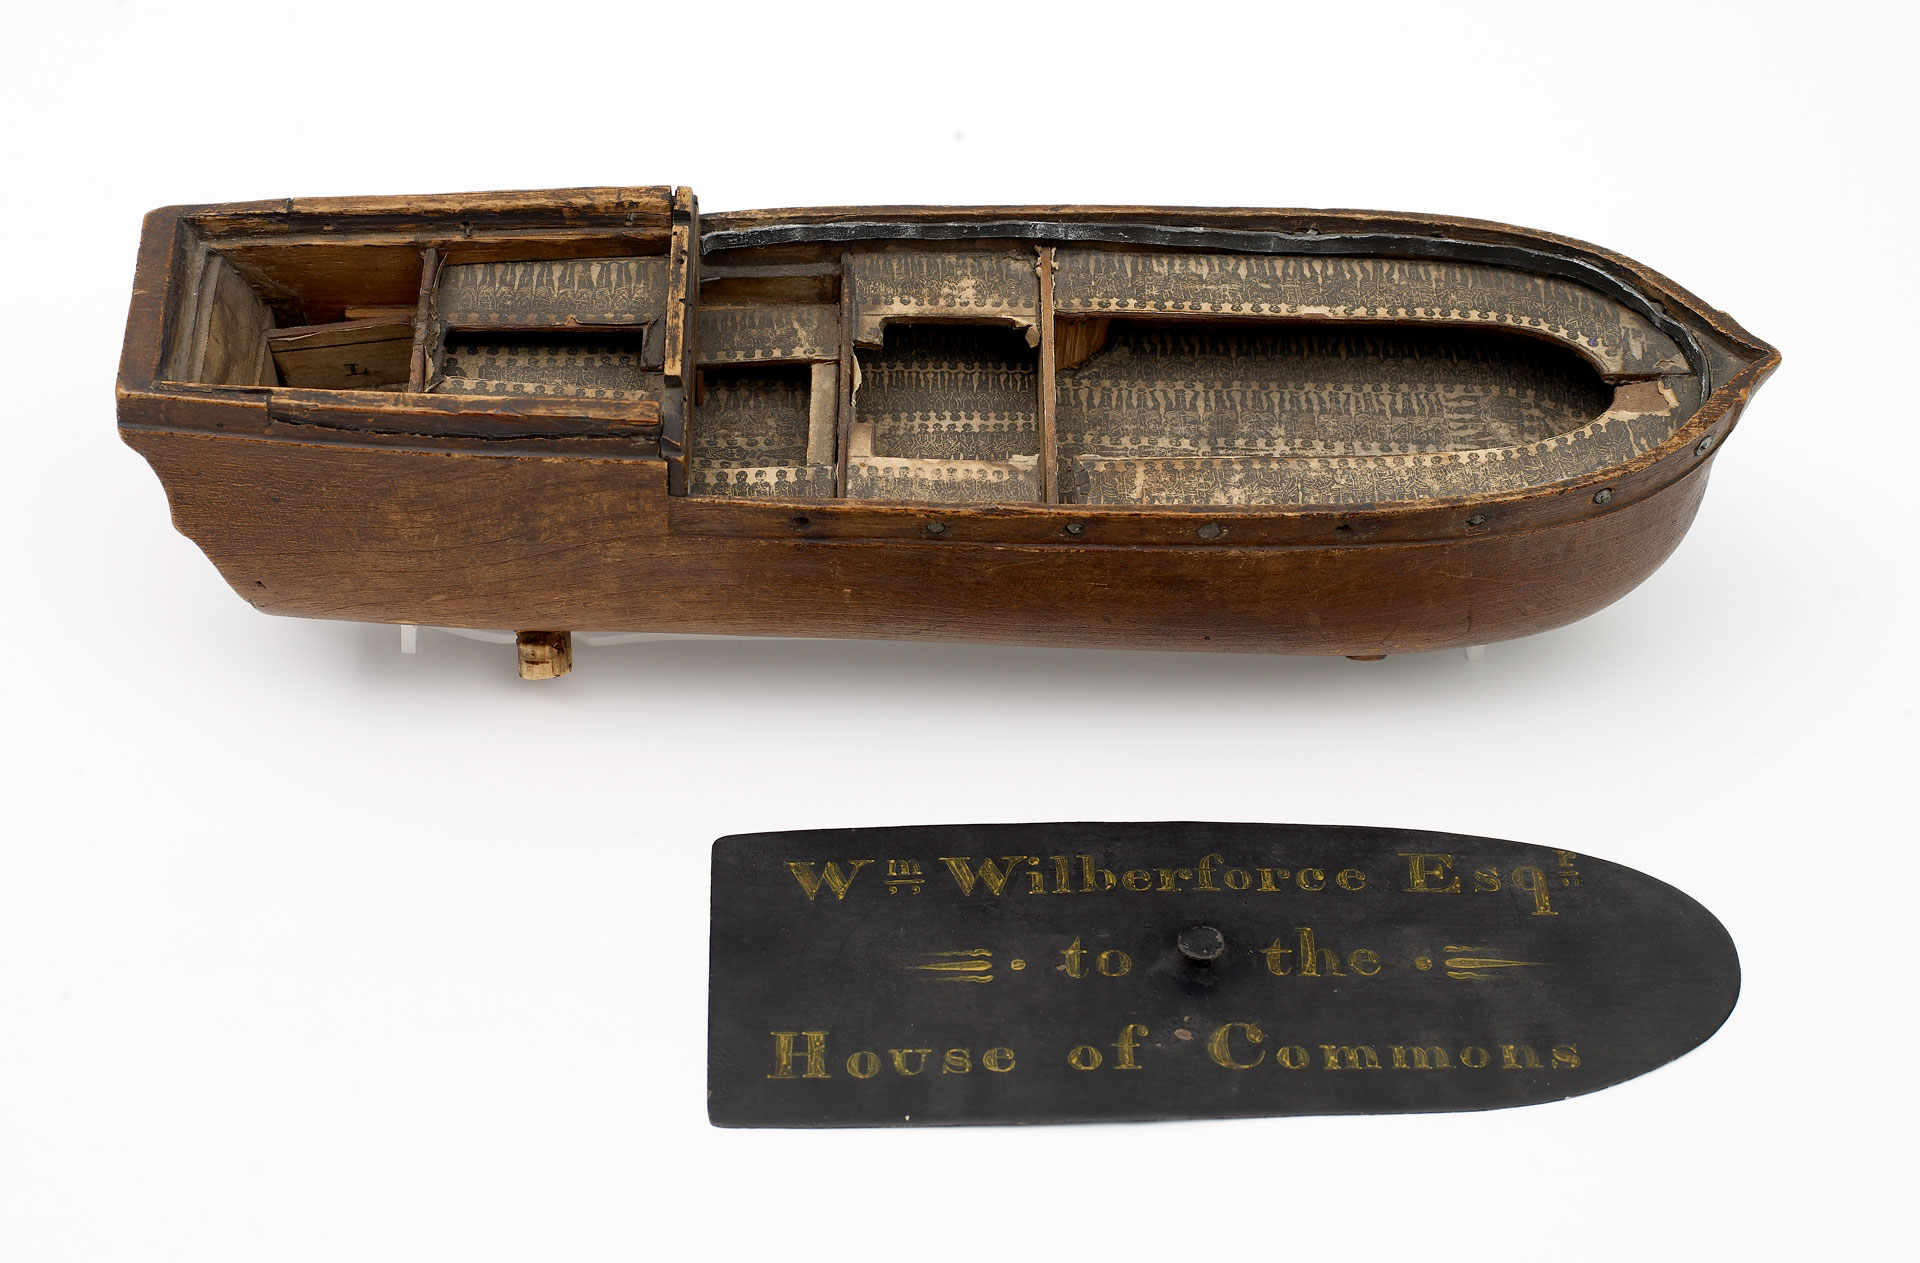 A wooden model of a slave ship.